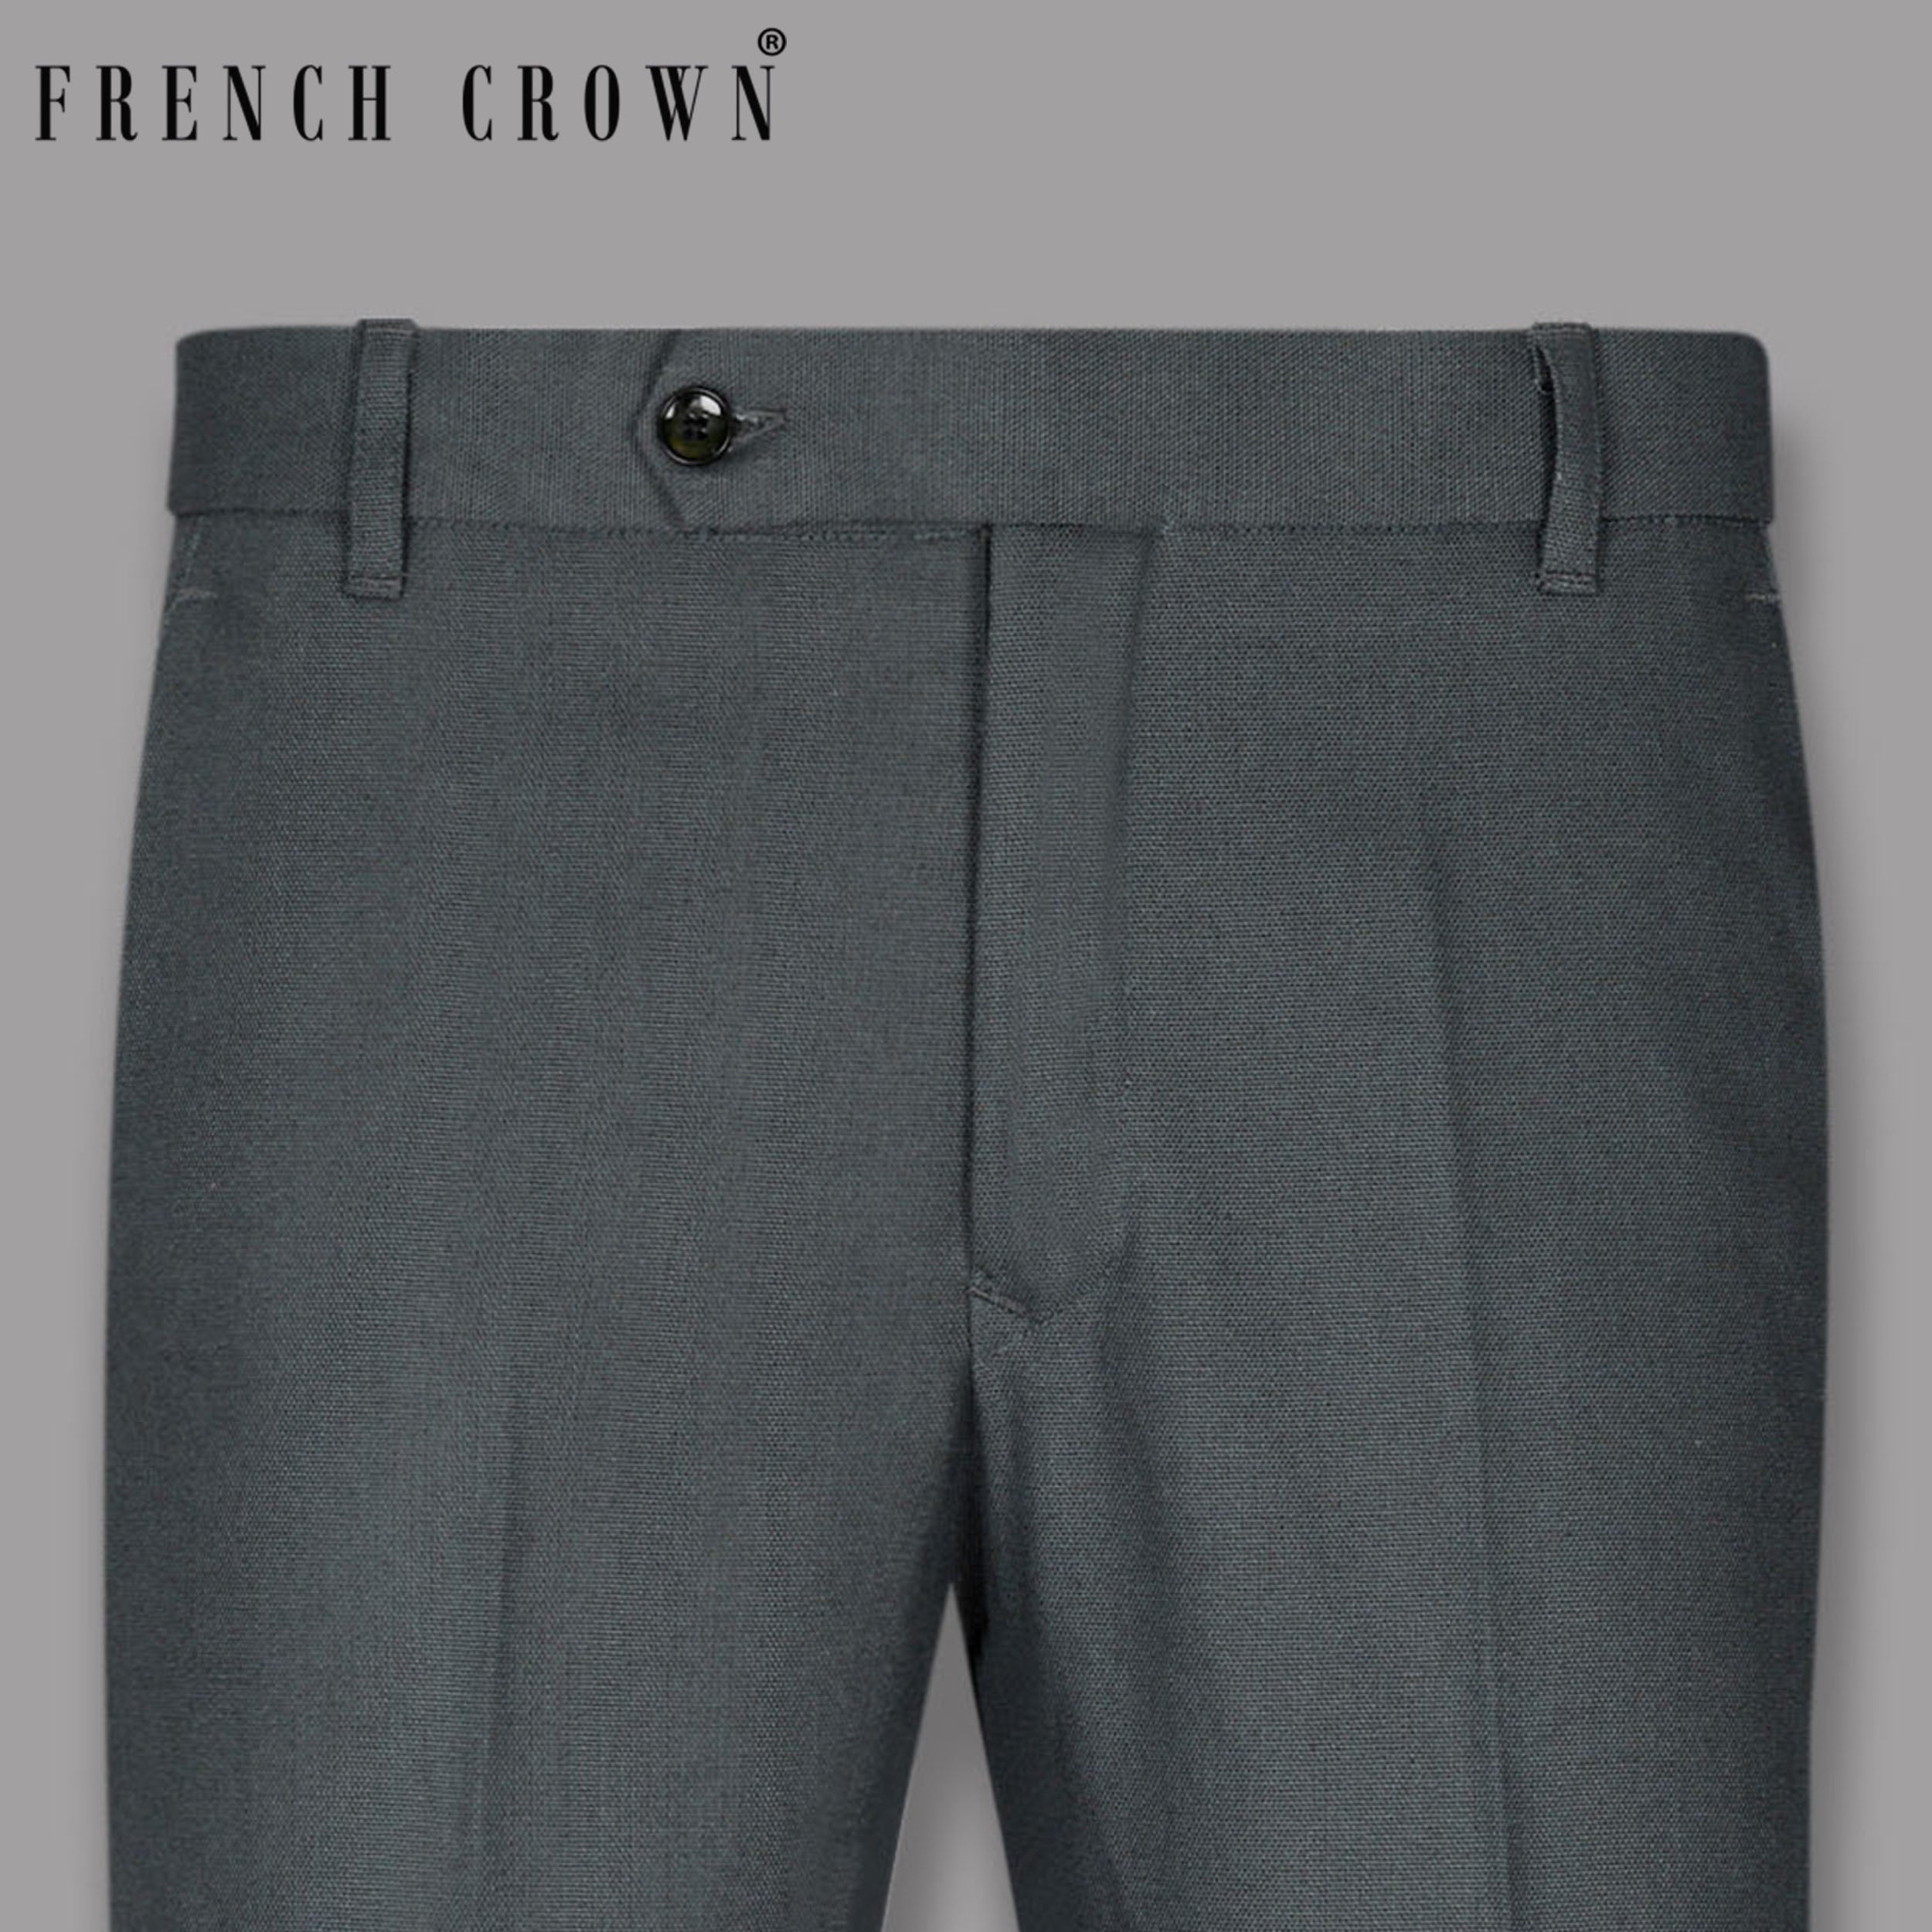 Iron grey Subtle Textured Premium Cotton Pant